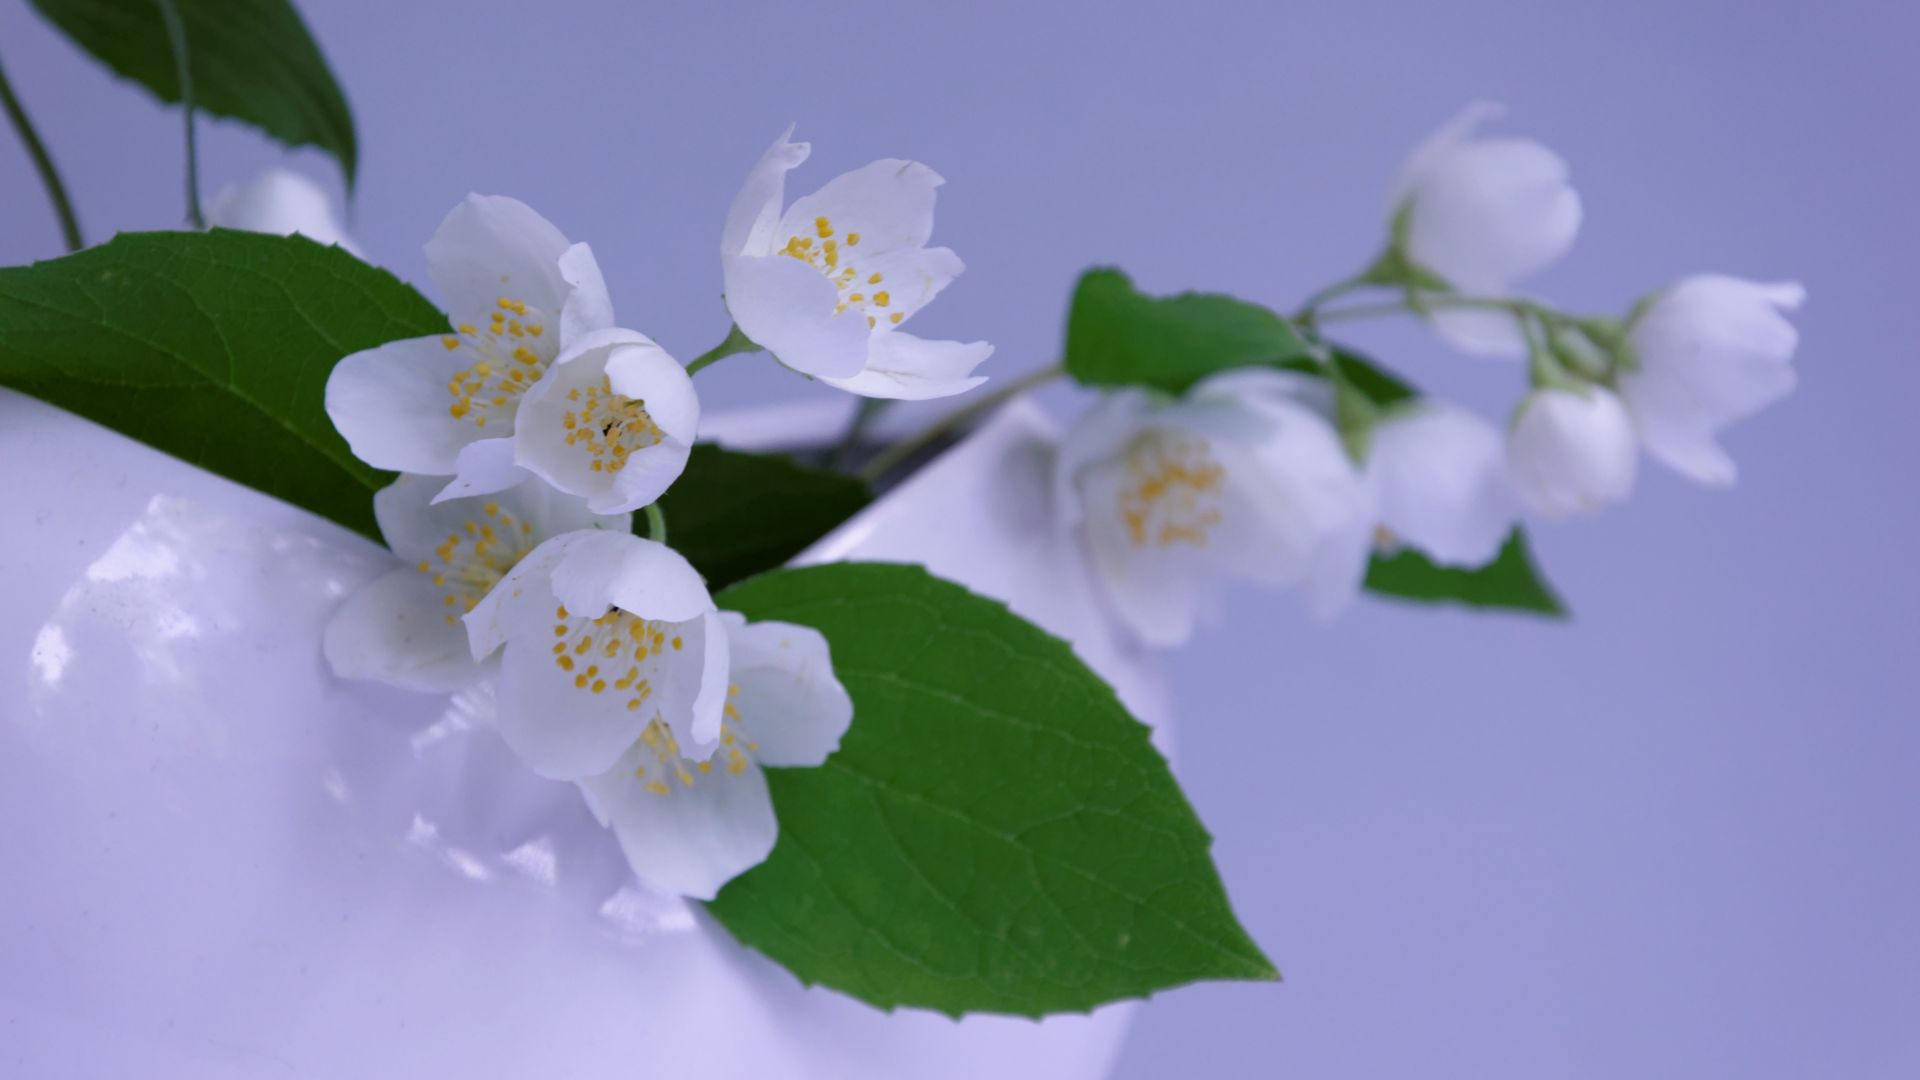 Desktop Wallpaper Jasmine, White Flowers, Leaves, Vase, Hd Image, Picture,  Background, A868ce